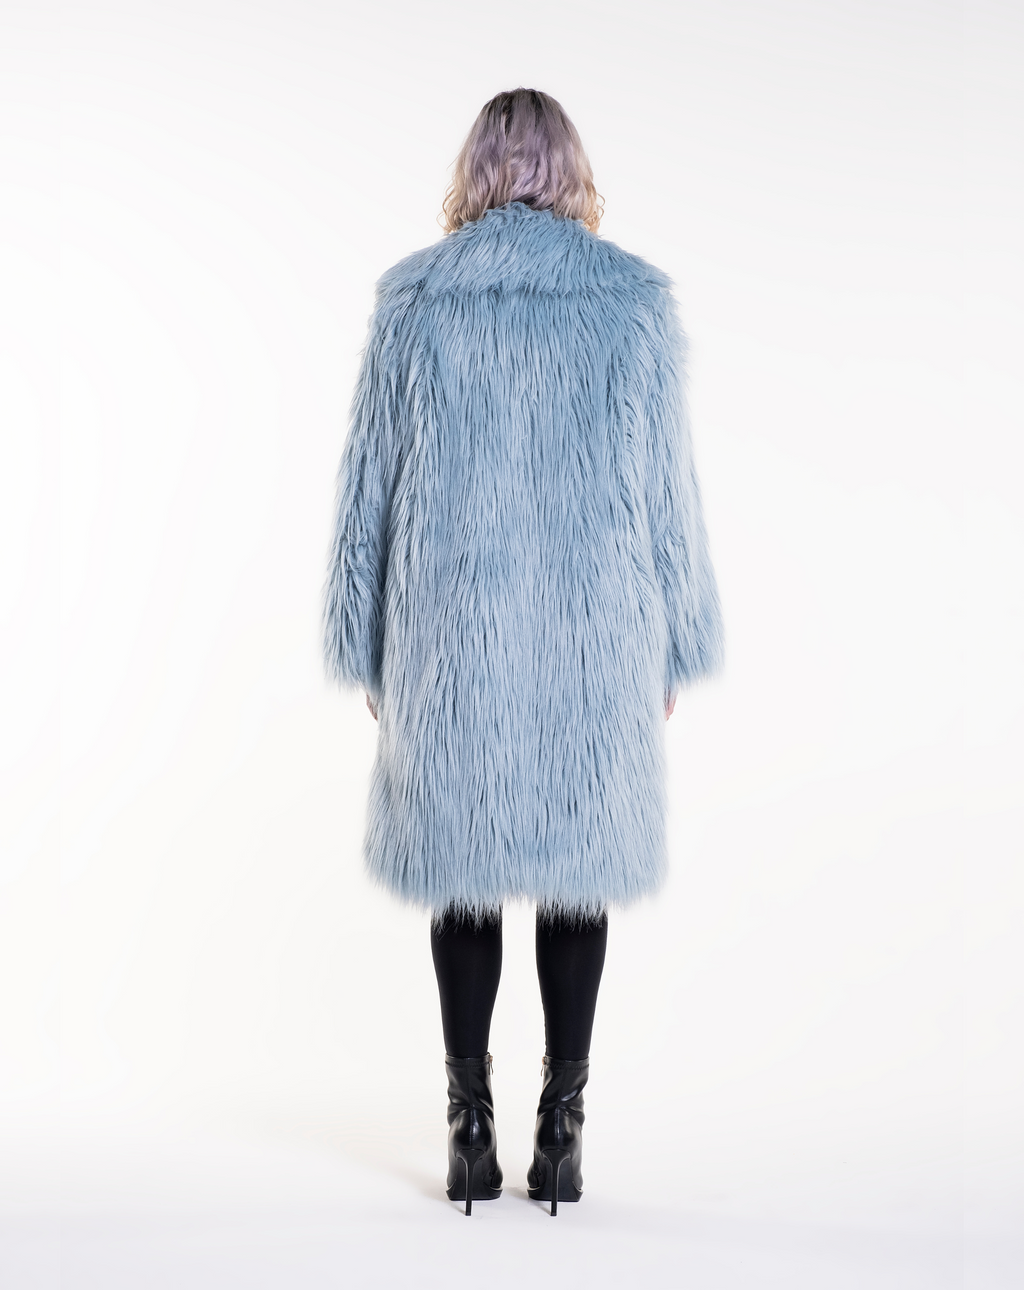 PUFFY POP - Pelliccia voluminosa in faux fur Baby Blue